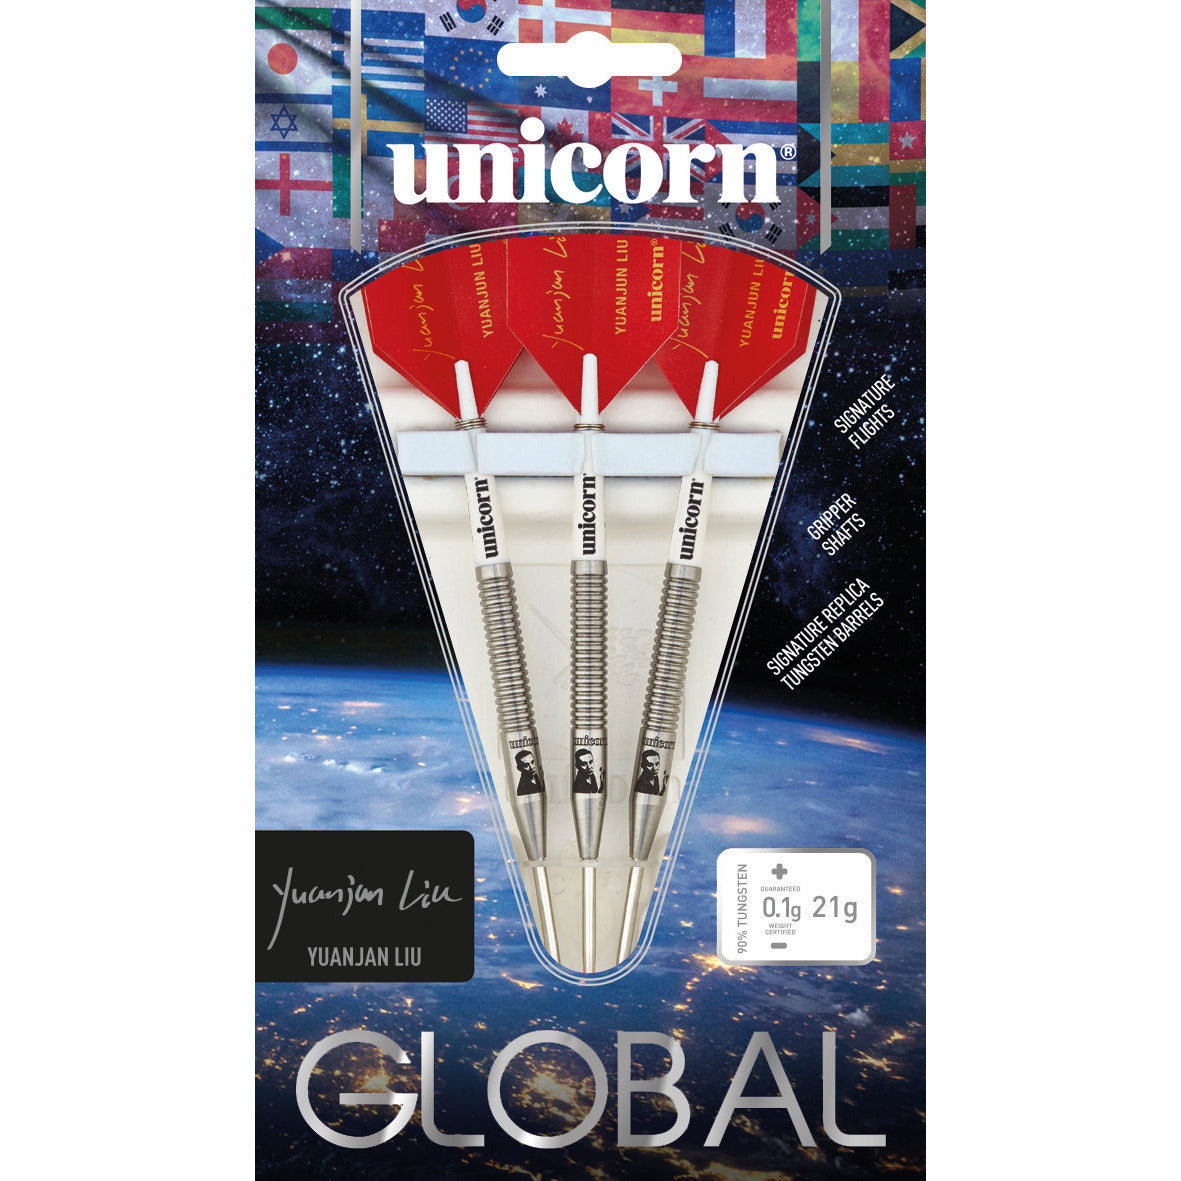 Unicorn Global Cameron Menzies Steel Darts